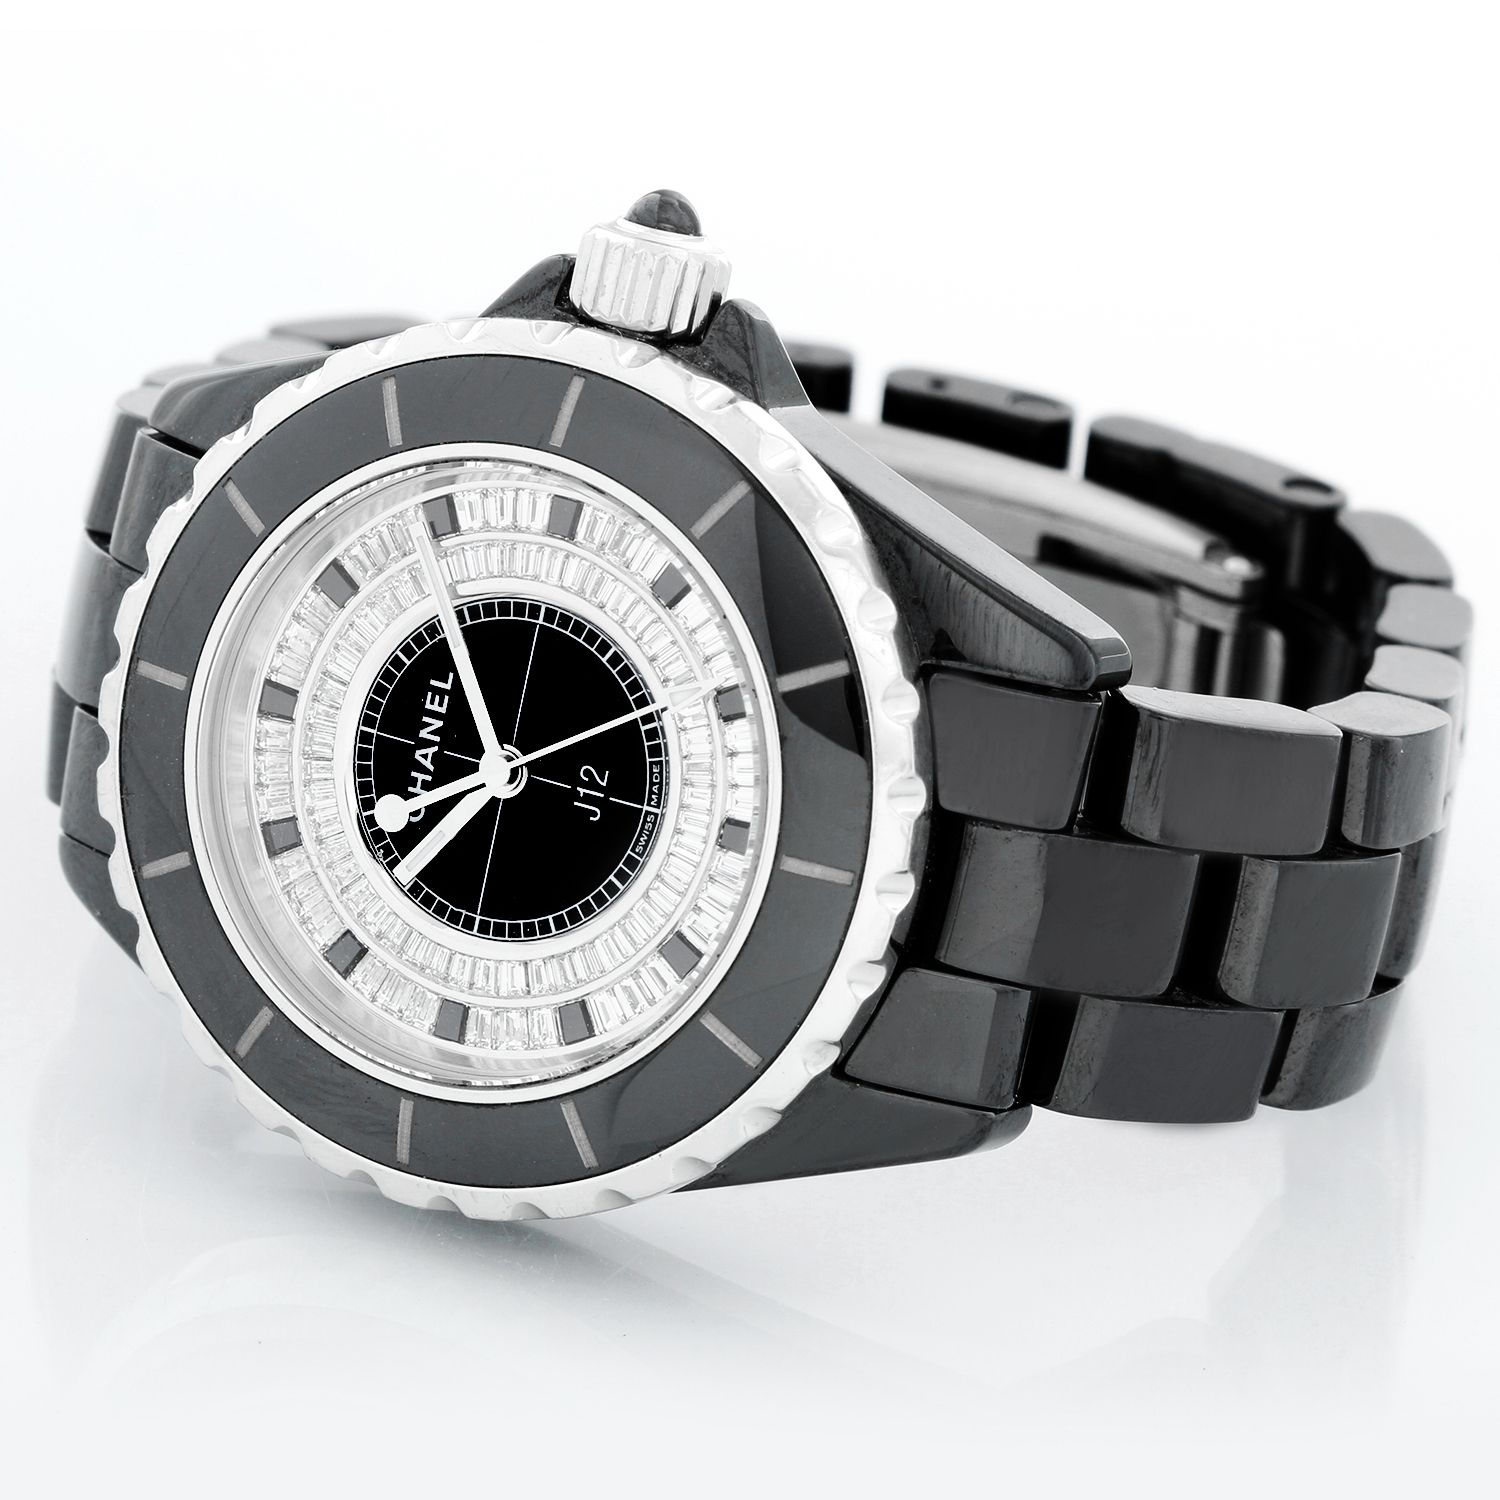 CHANEL J12 Black Ceramic 33mm w/accent Diamond Watch 🖤 - $5900